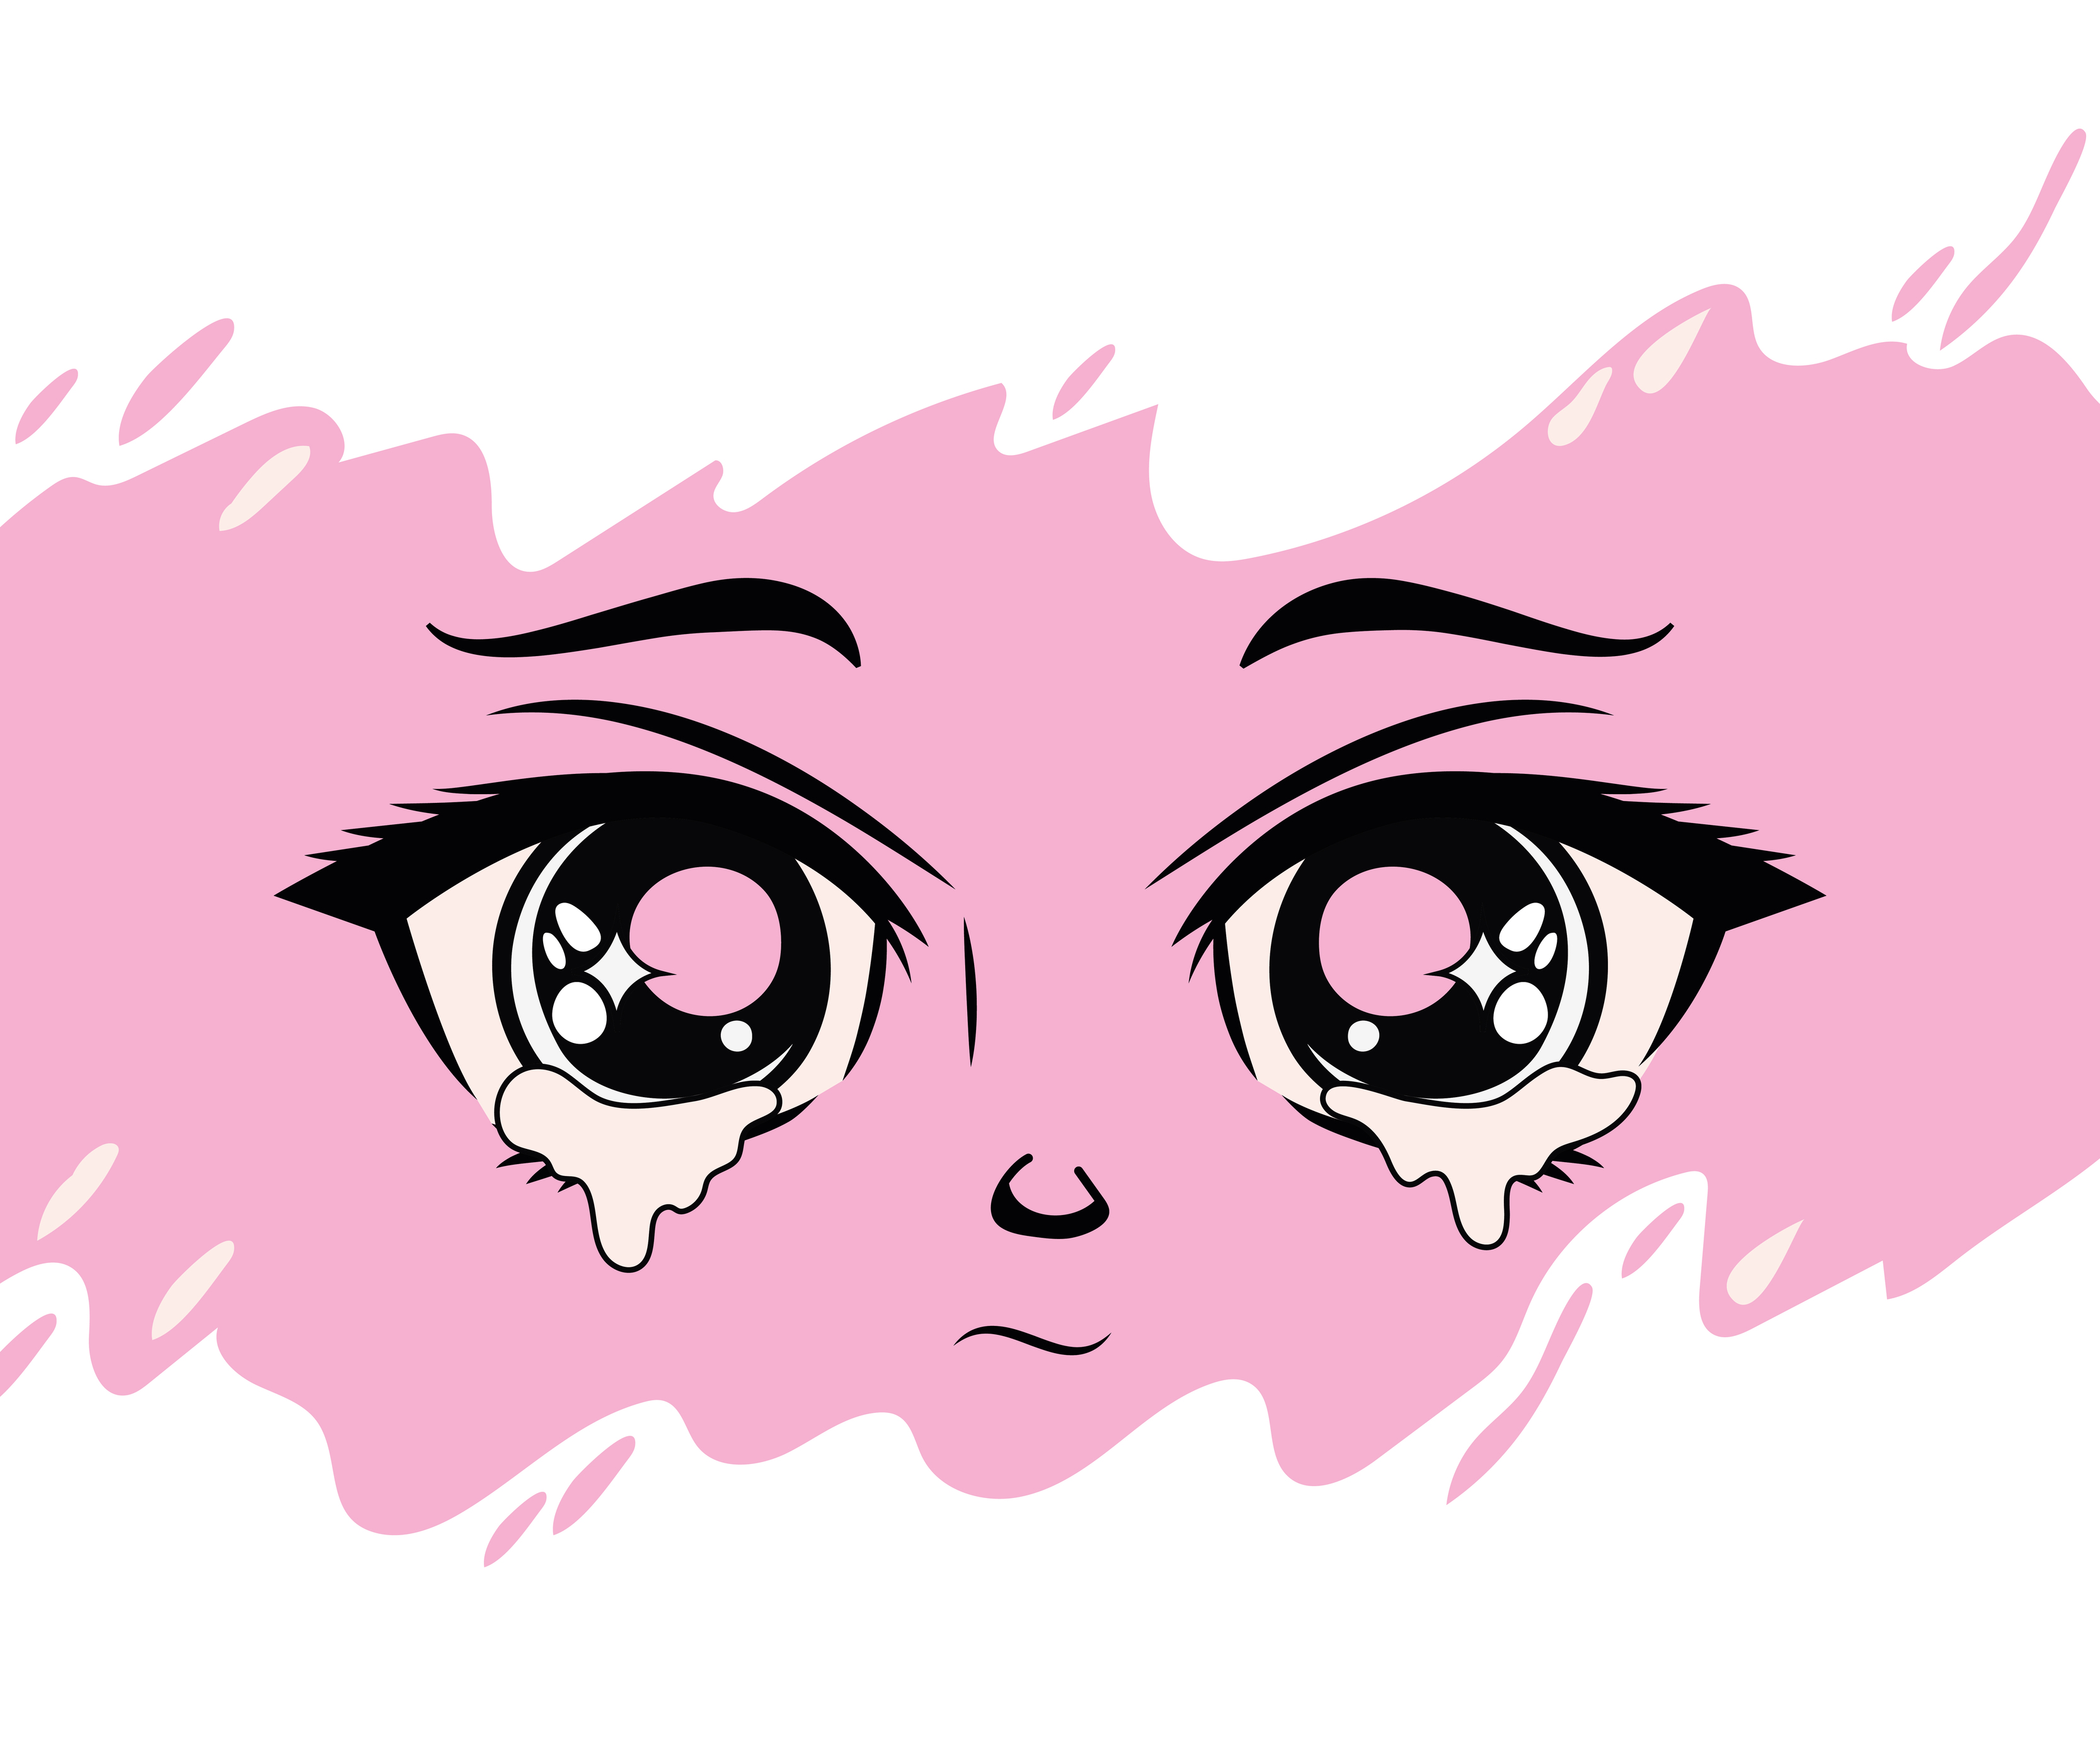 Crying Eyes Manga Style Royalty Free SVG Cliparts Vectors And Stock  Illustration Image 78622549